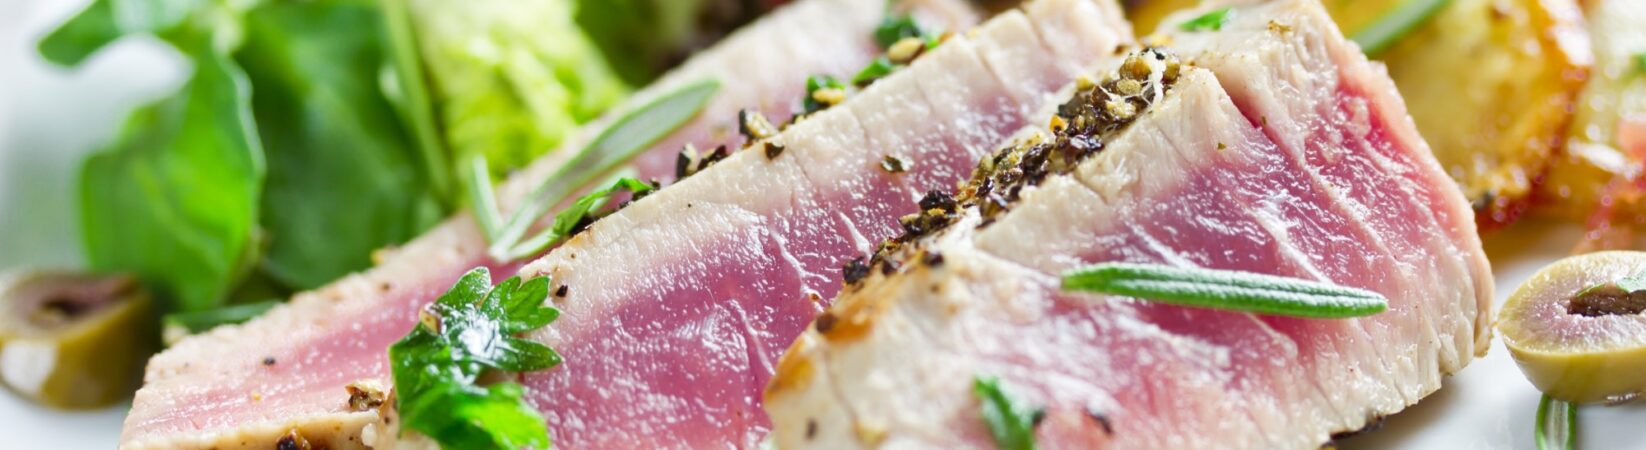 Thunfisch ist kalorienarm, sättigend und reich an Omega-3-Fetten